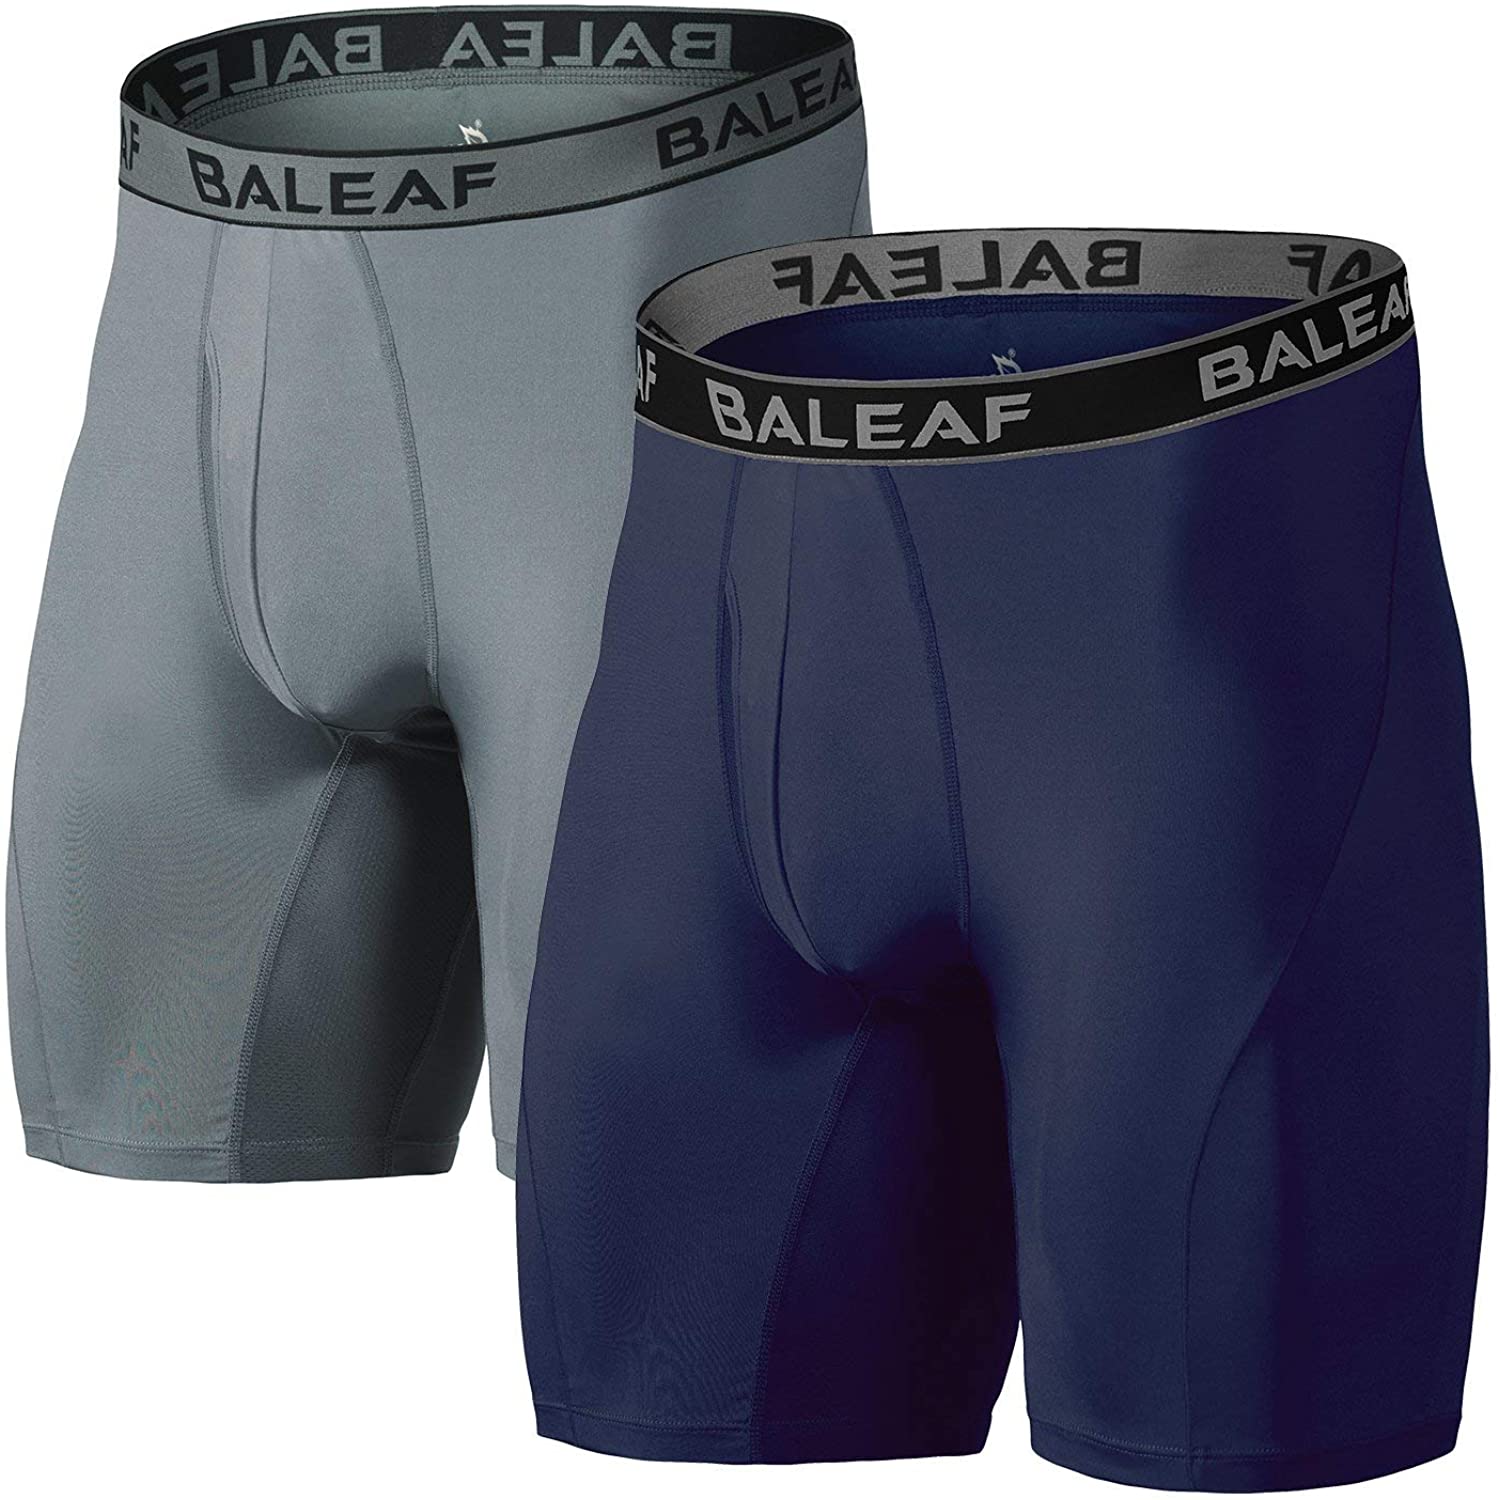 BALEAF Men's Cool Dry 9 Inch Underwear Long Leg Athletic Boxer Briefs Sport Workout Stretch 2-Pack Lightweight 